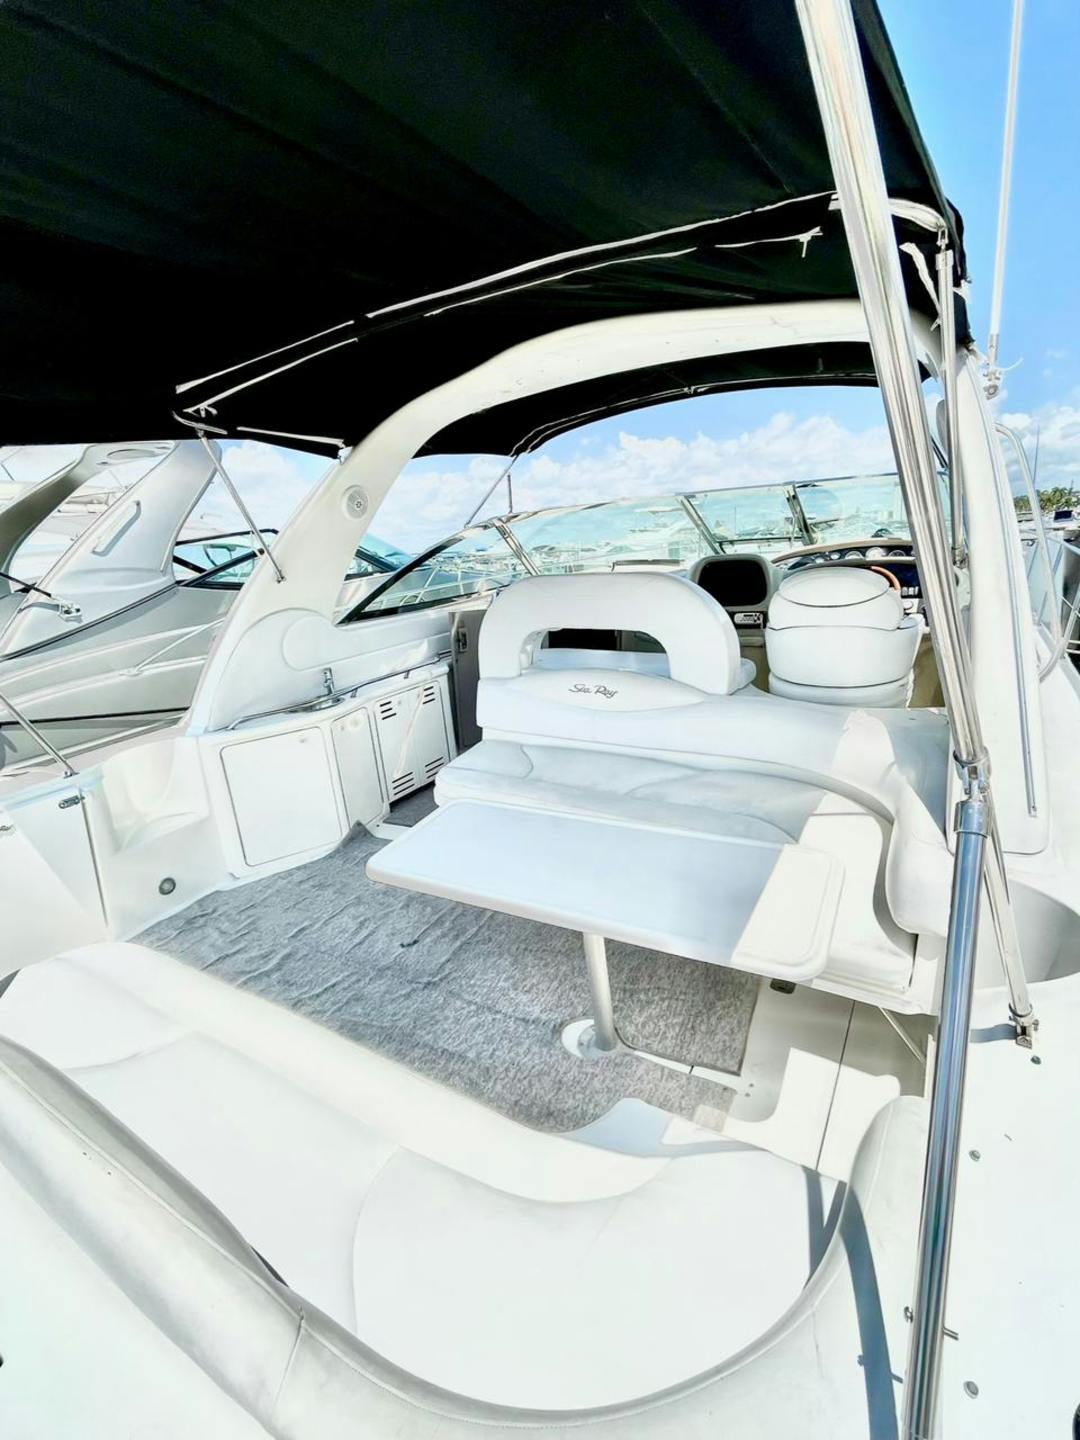 44 Sea Ray luxury charter yacht - Cancún, Mexico